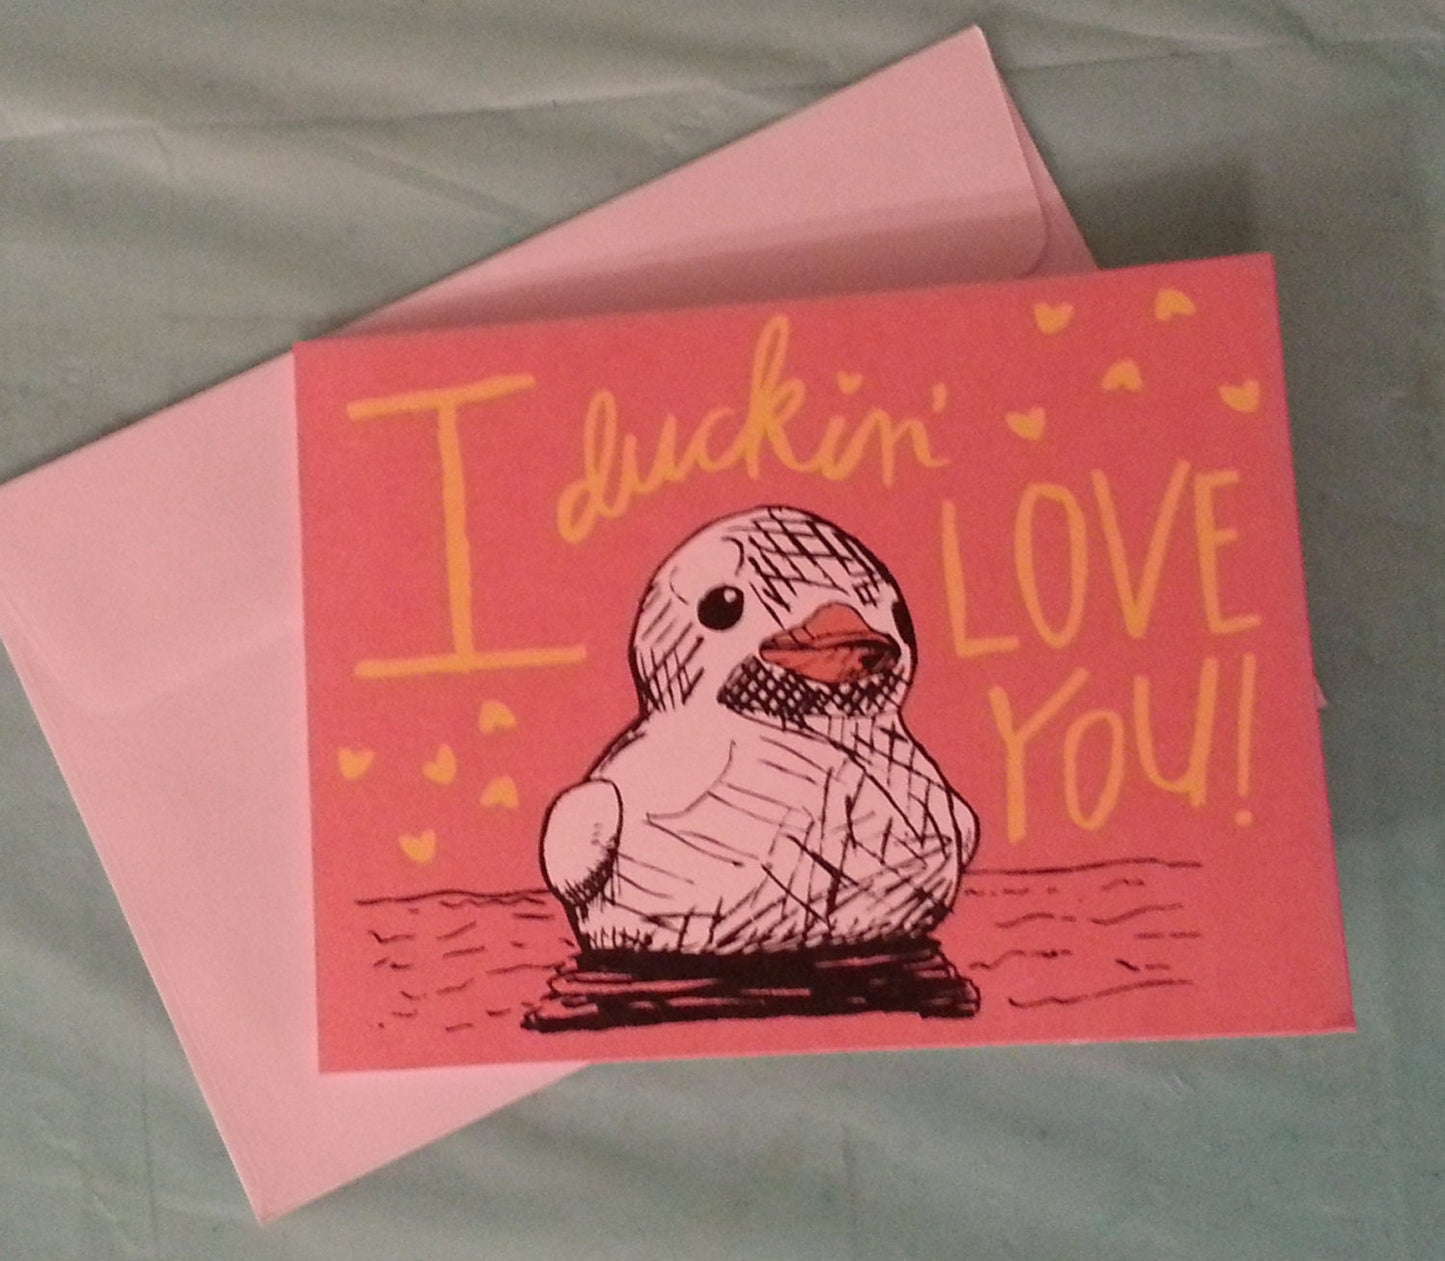 Valentine's Day Card - I Duckin' Love You!